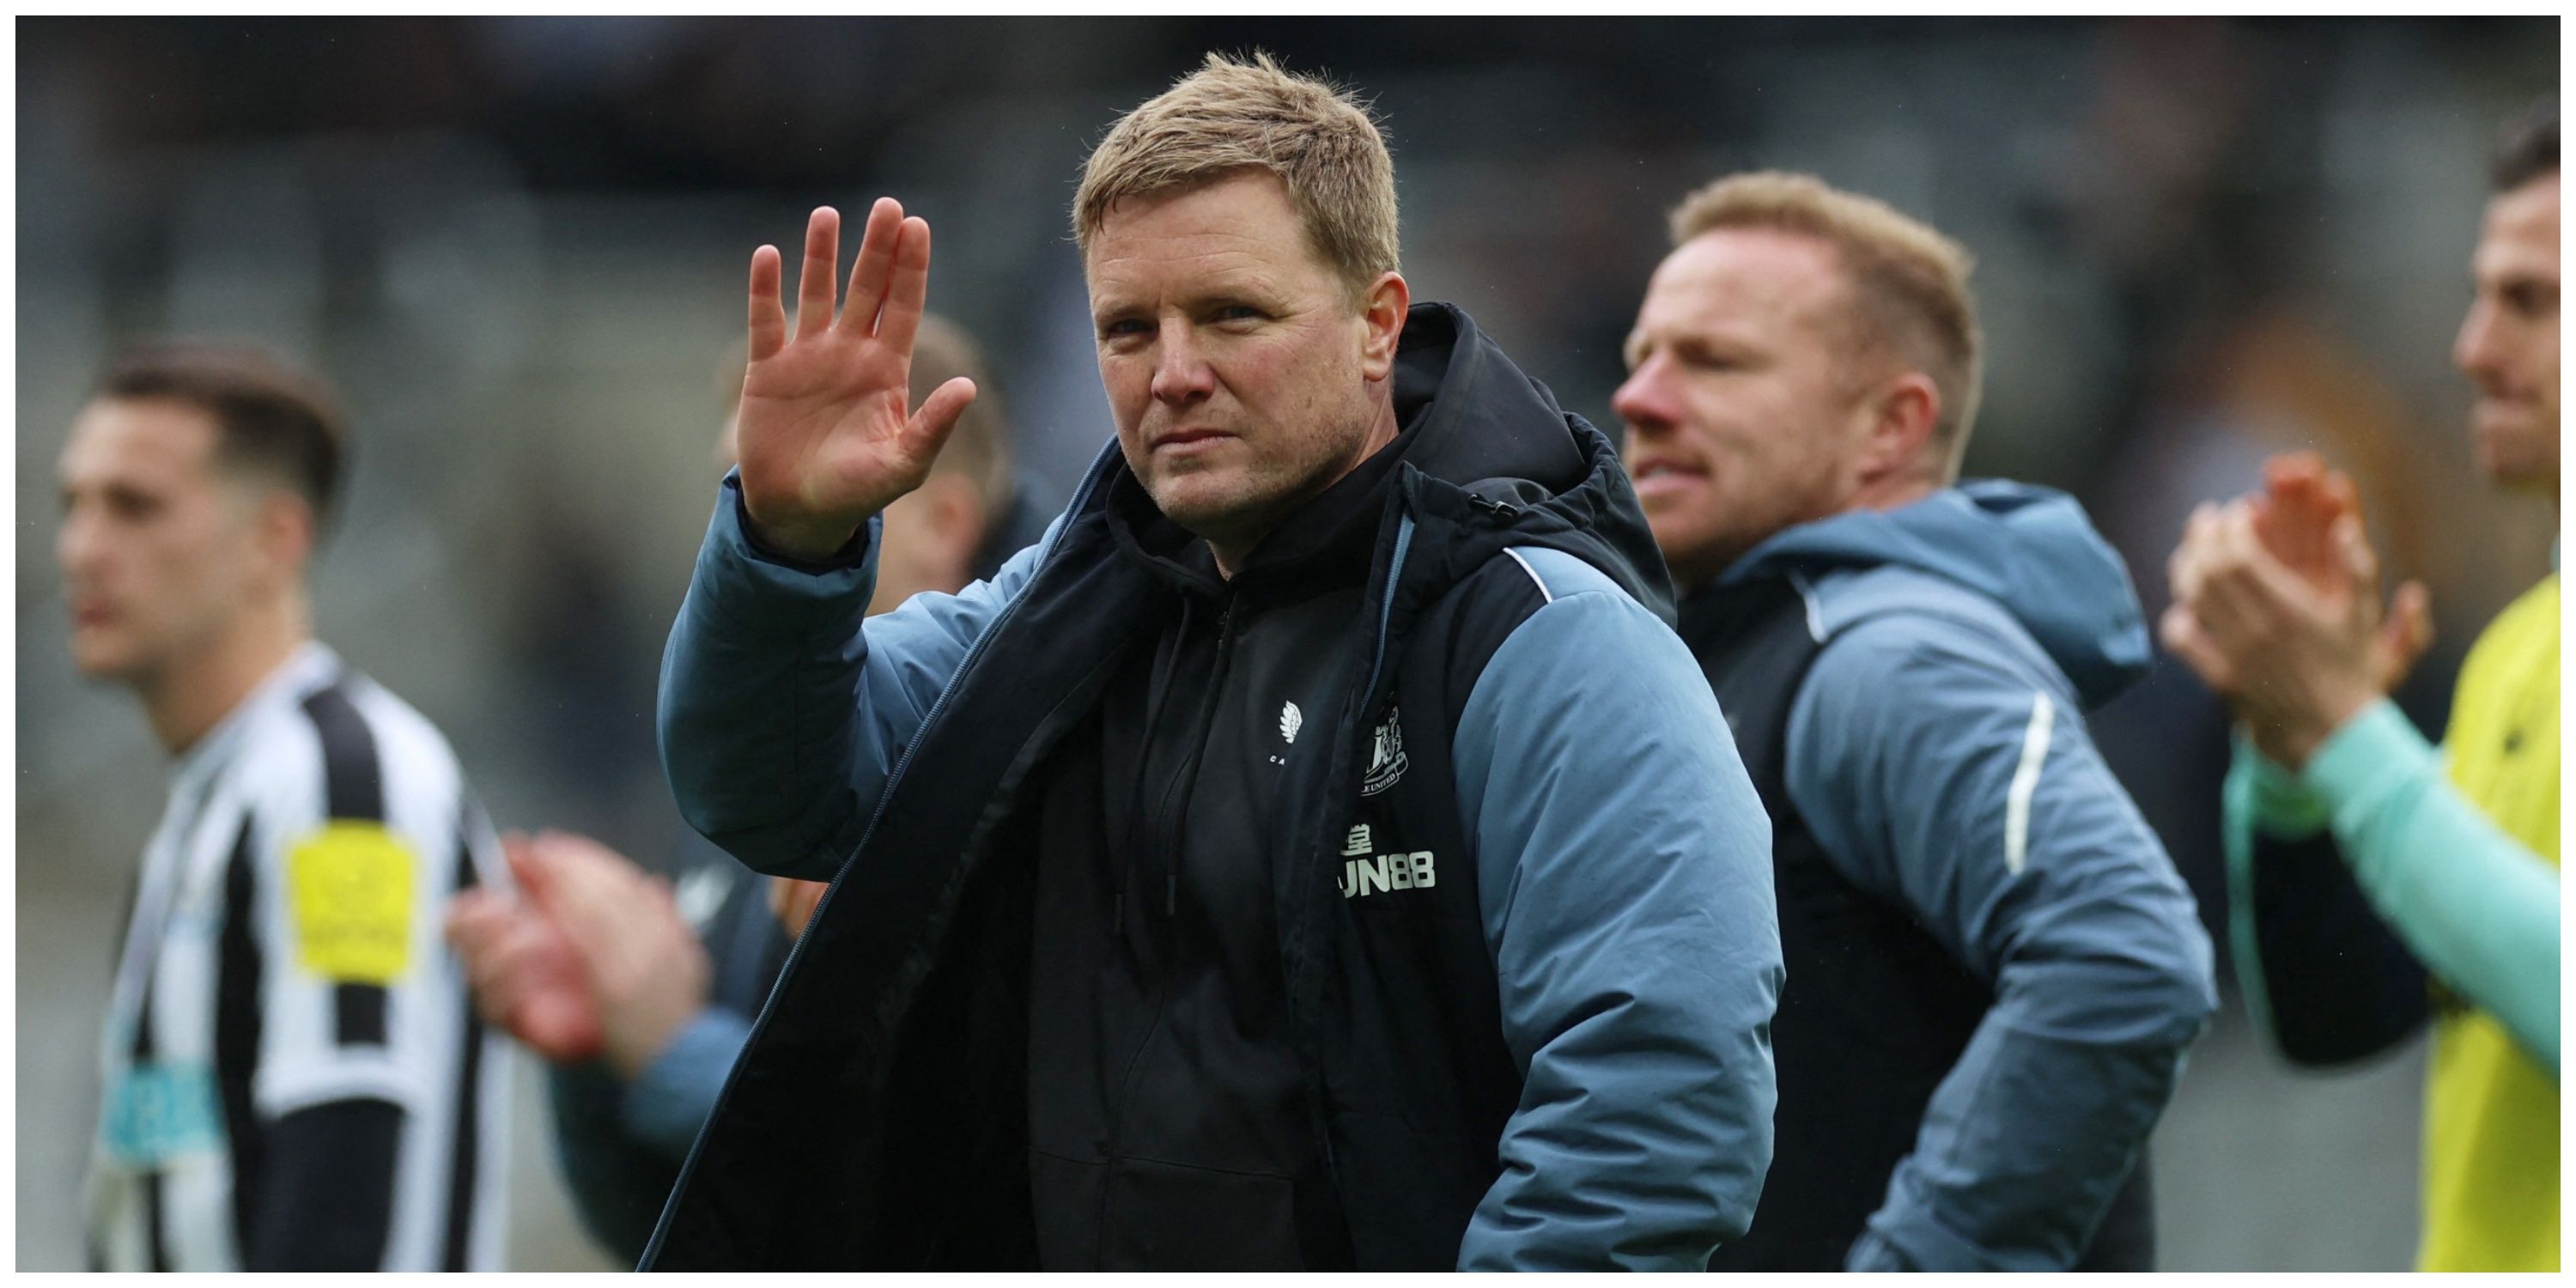 Newcastle United manager Eddie Howe waving